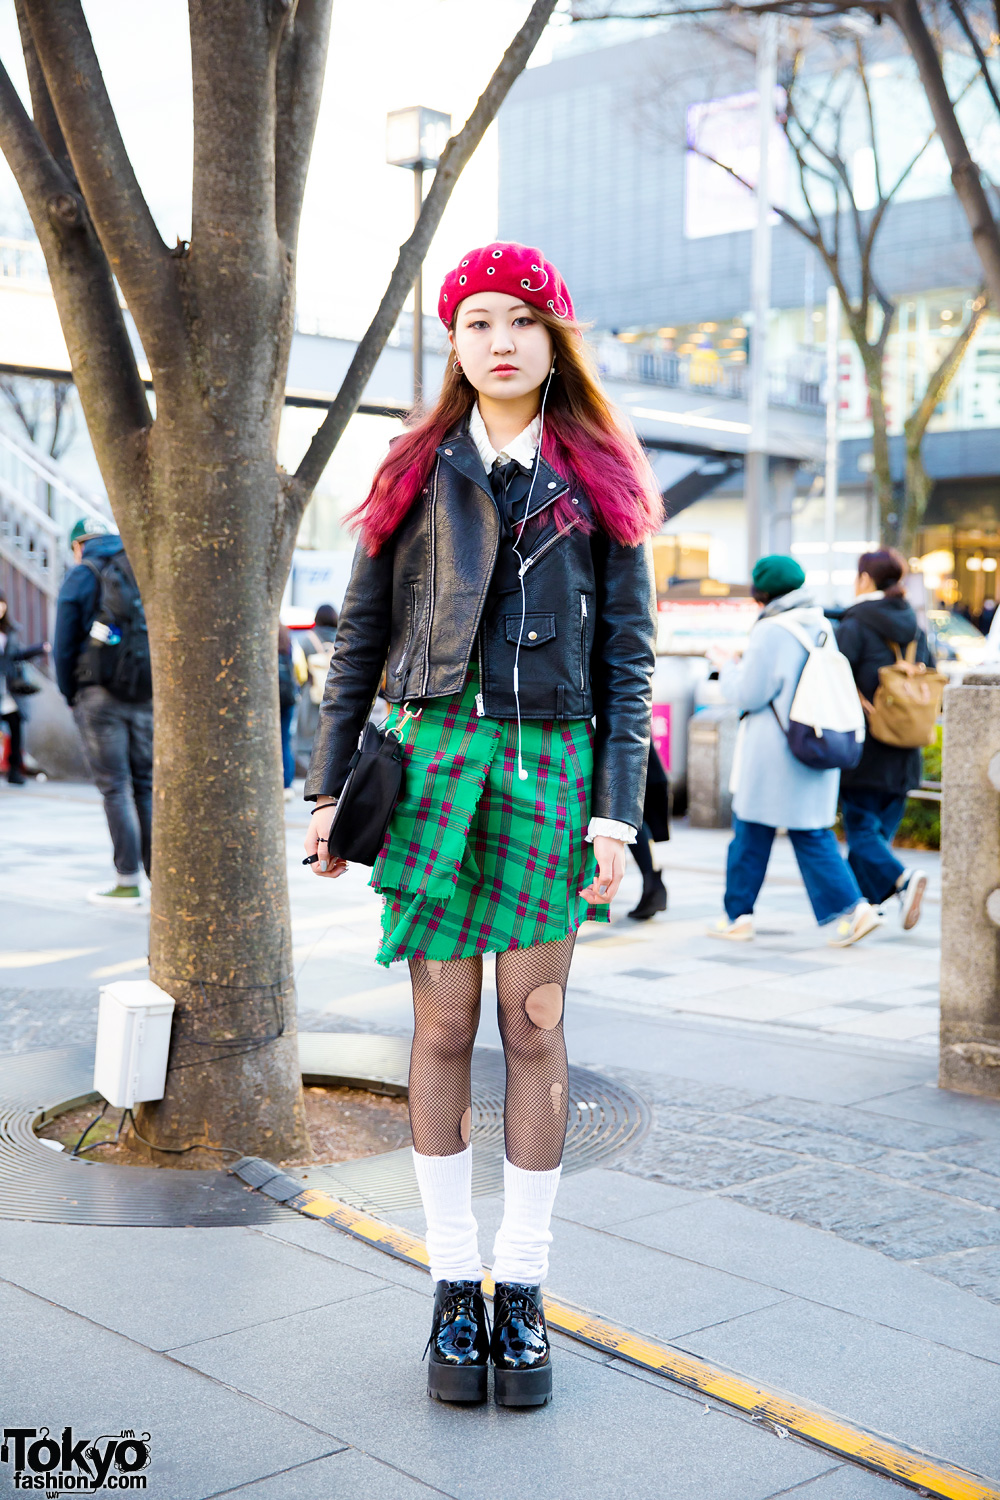 Harajuku Girl in Rocker Chic Street Style w/ Bubbles, Zara, Eria/Area & Little Sunny Bites